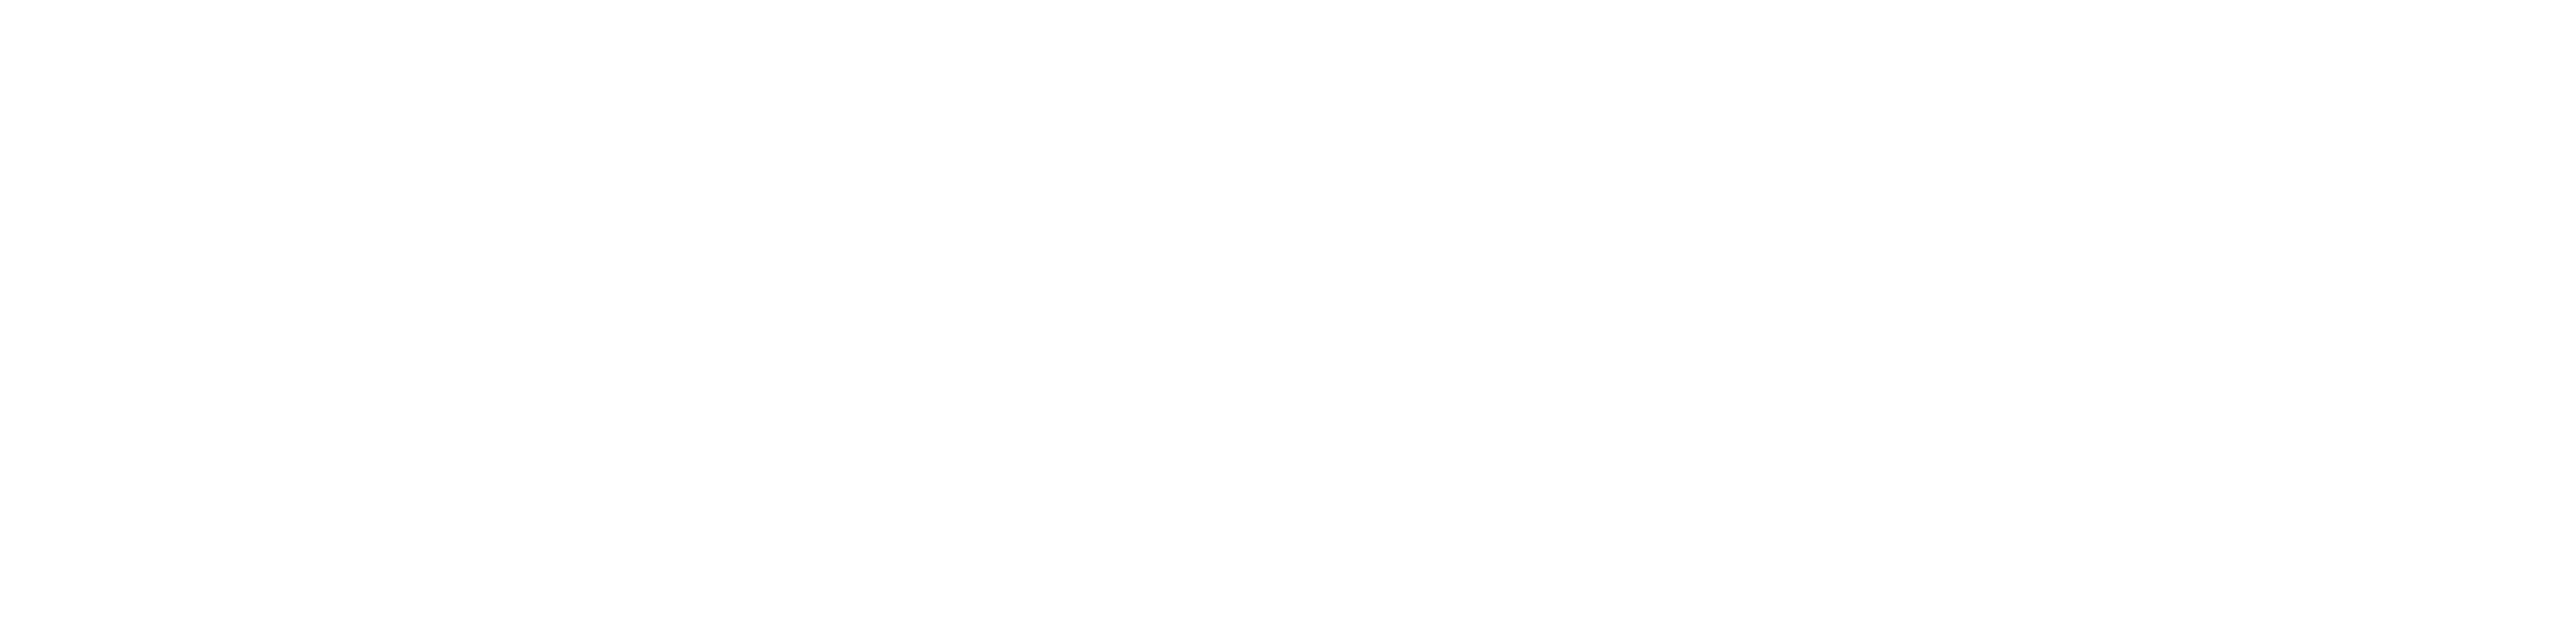 ABTA National Conference logo